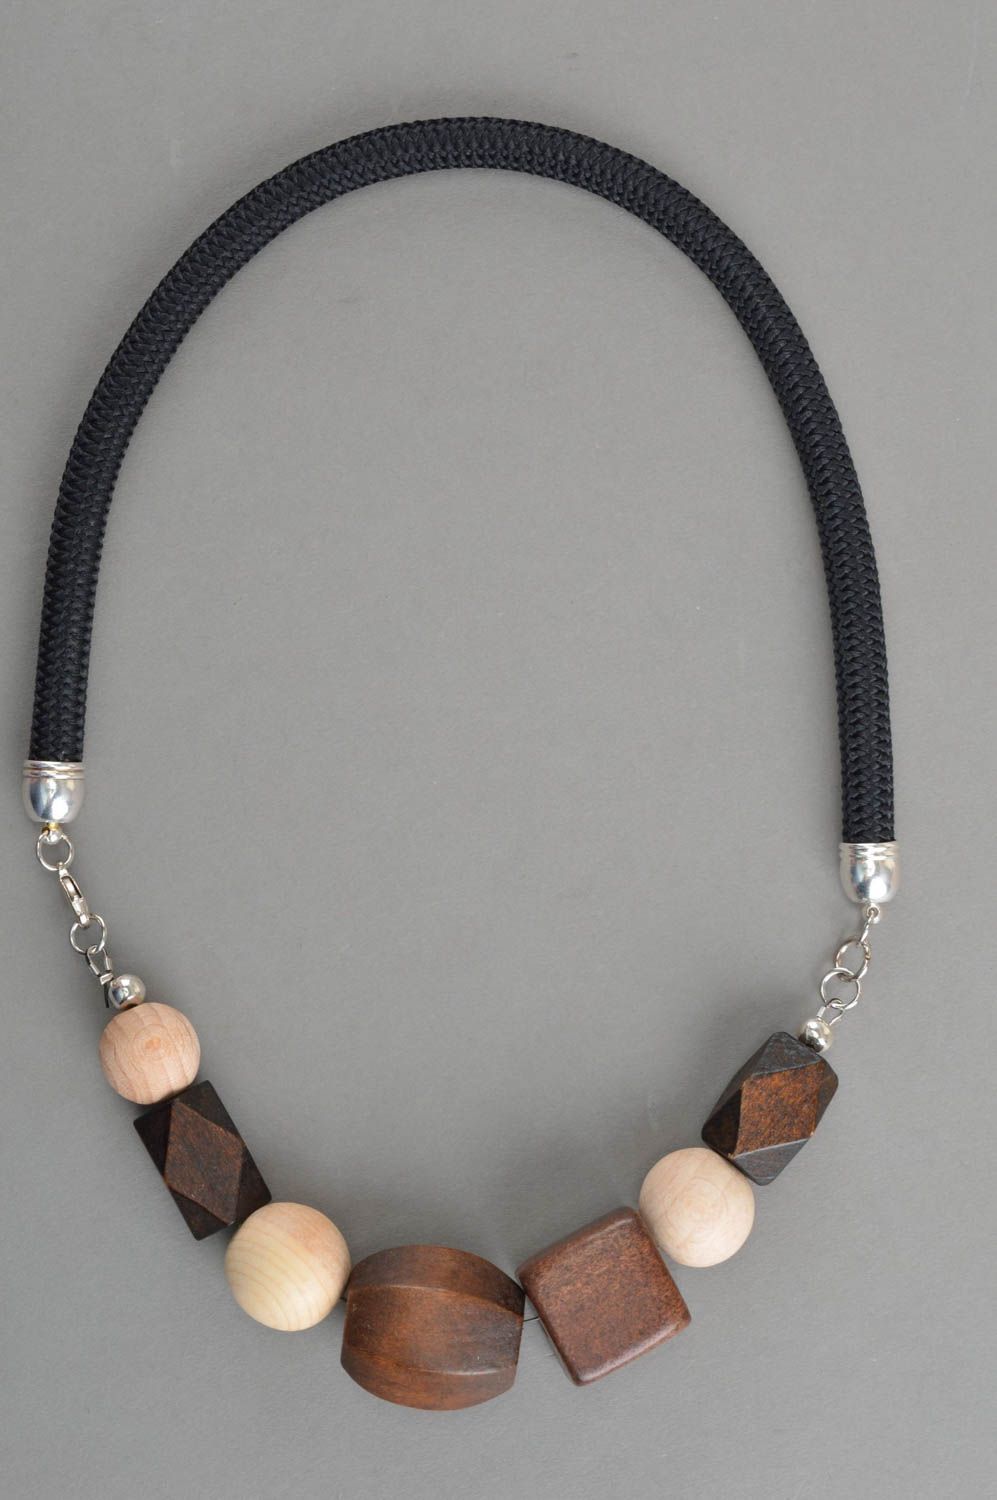 Handmade beaded jewelry necklace made of wood unusual stylish accessory photo 2